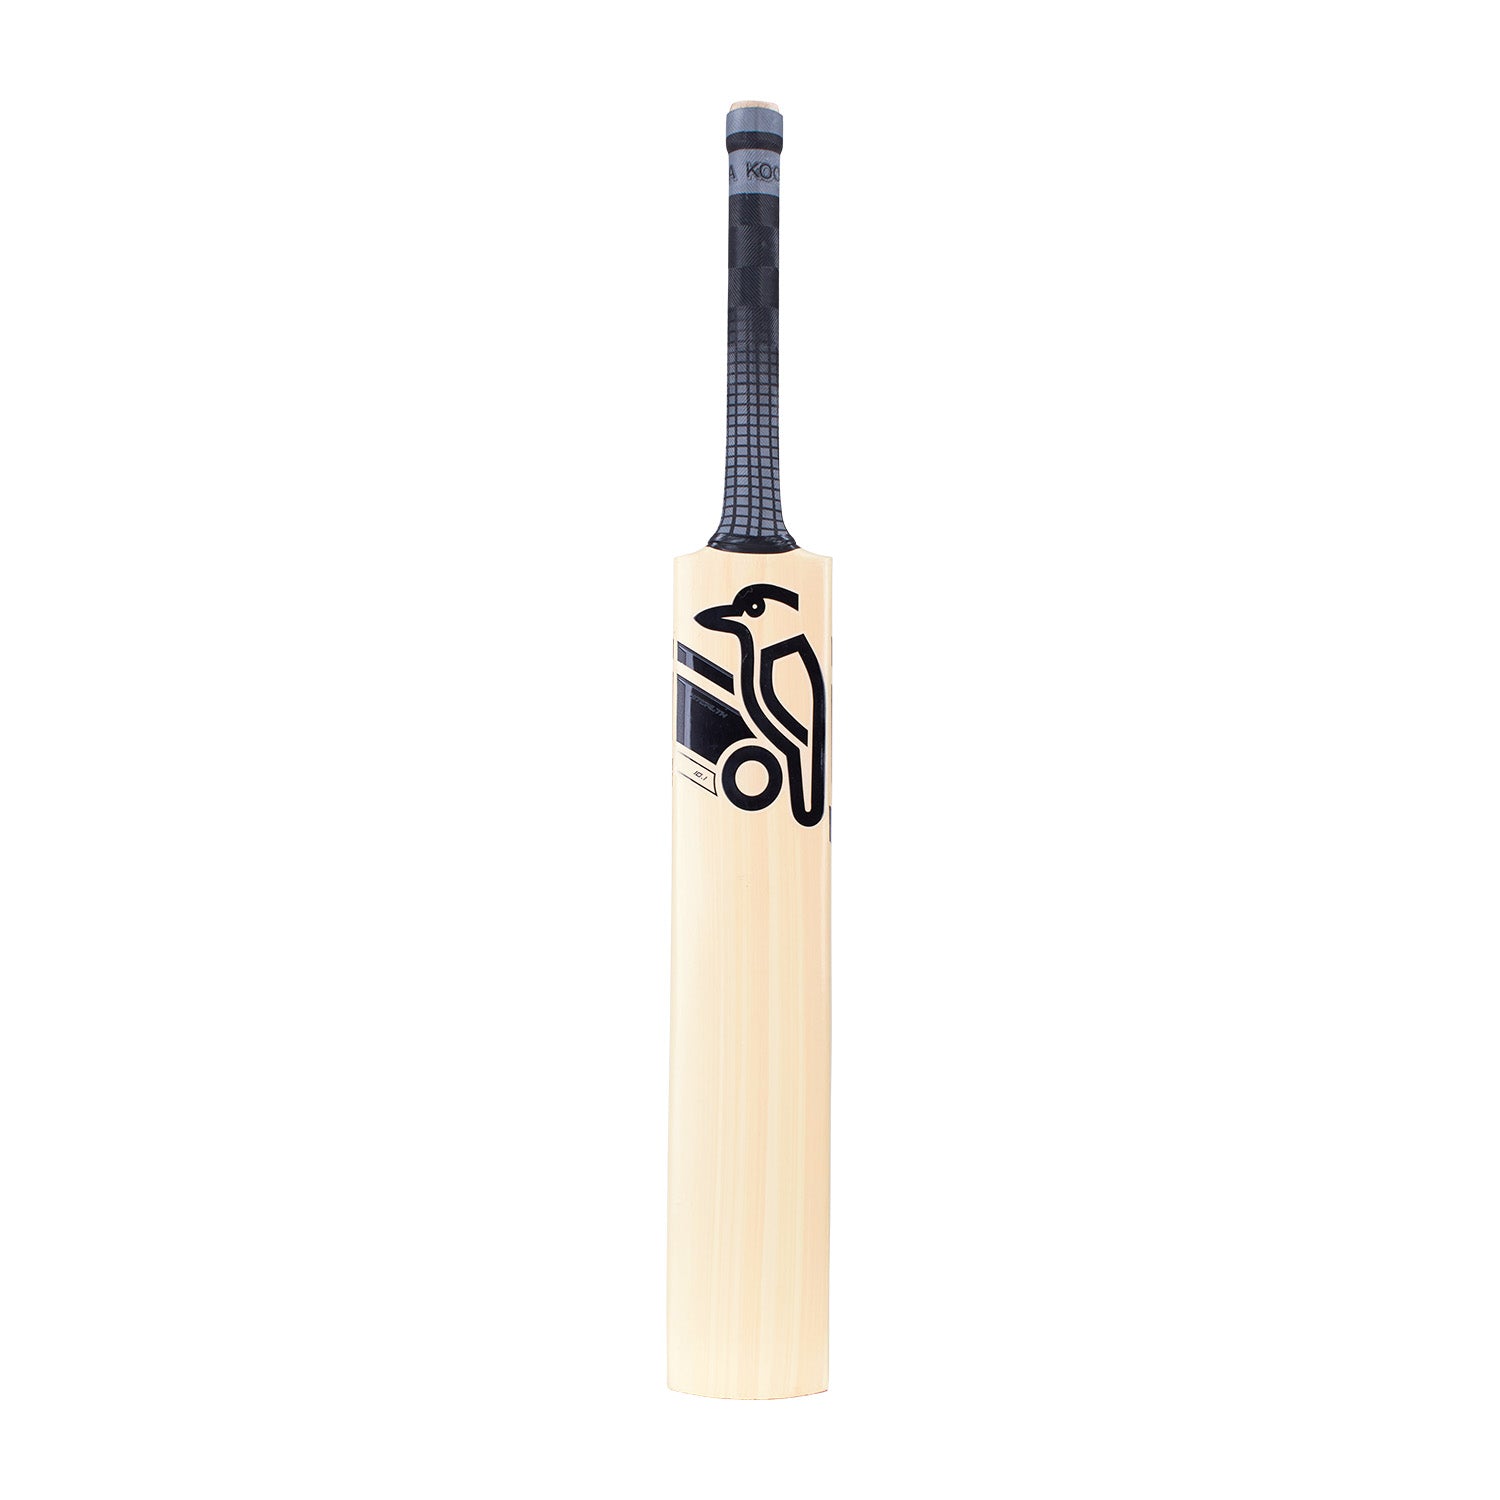 Kookaburra Stealth 10.1 Junior Cricket Bat